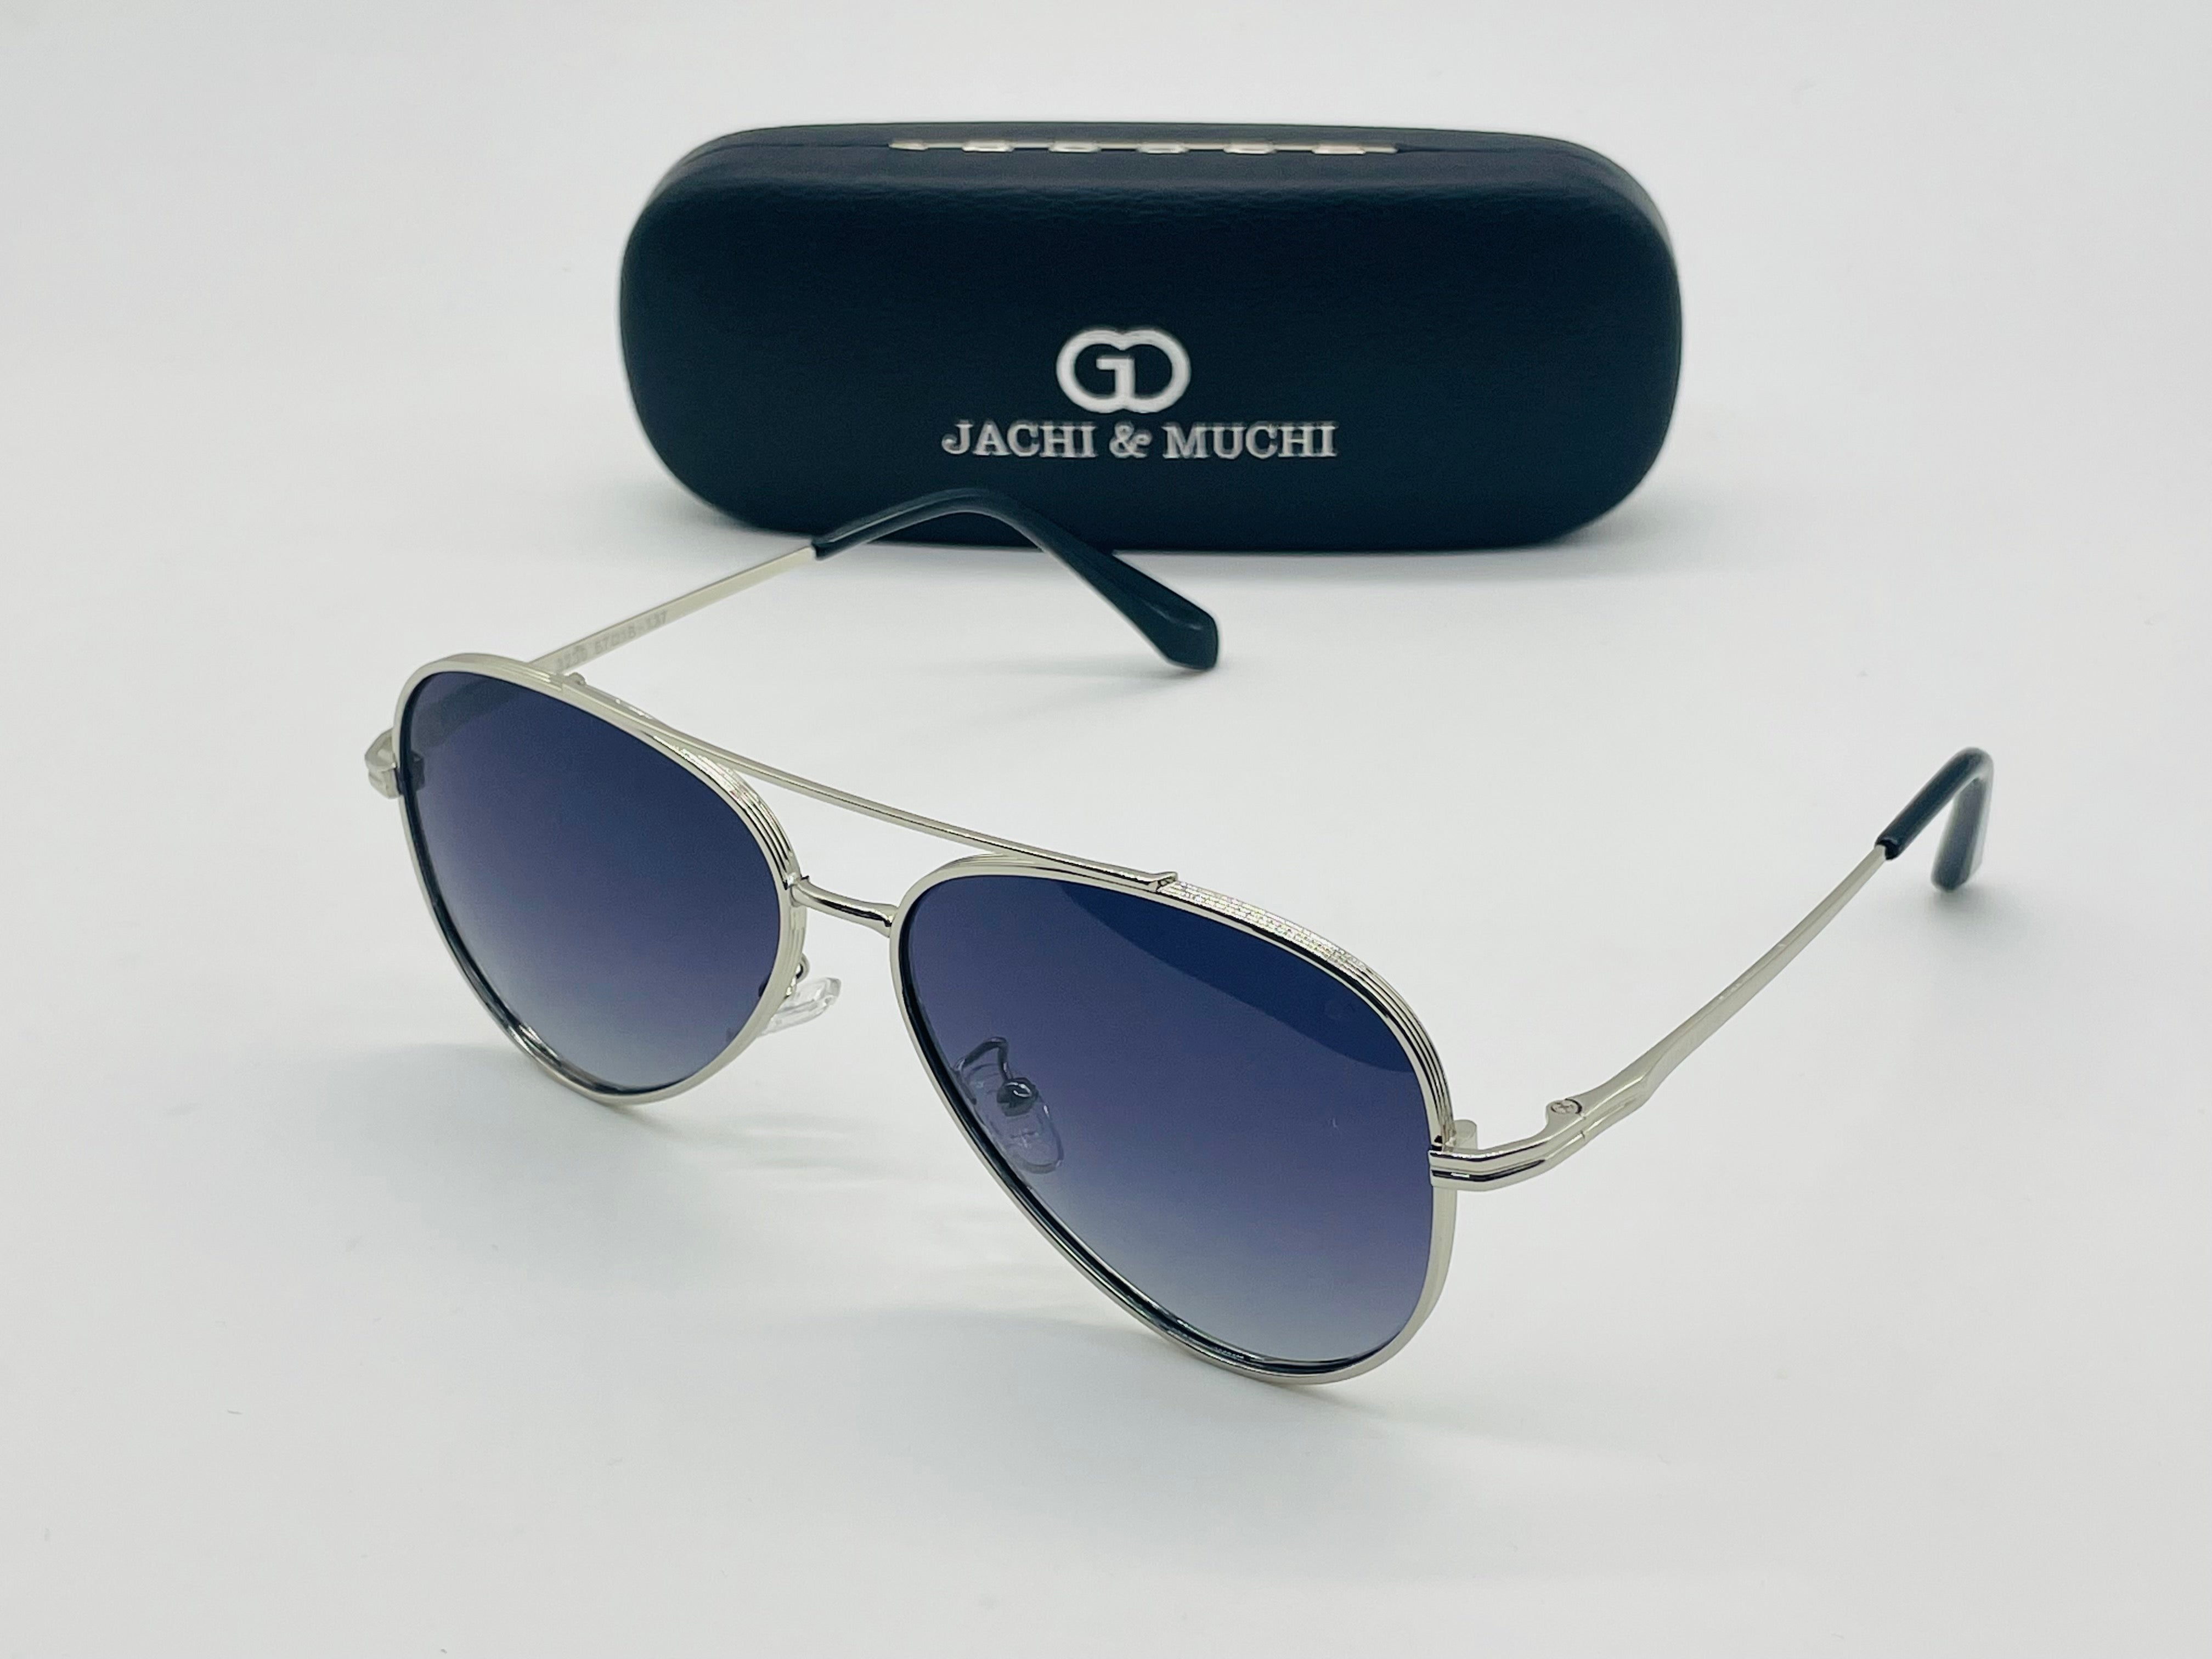 3166 Classic HD Polarized UV400 Aviator Sunglasses